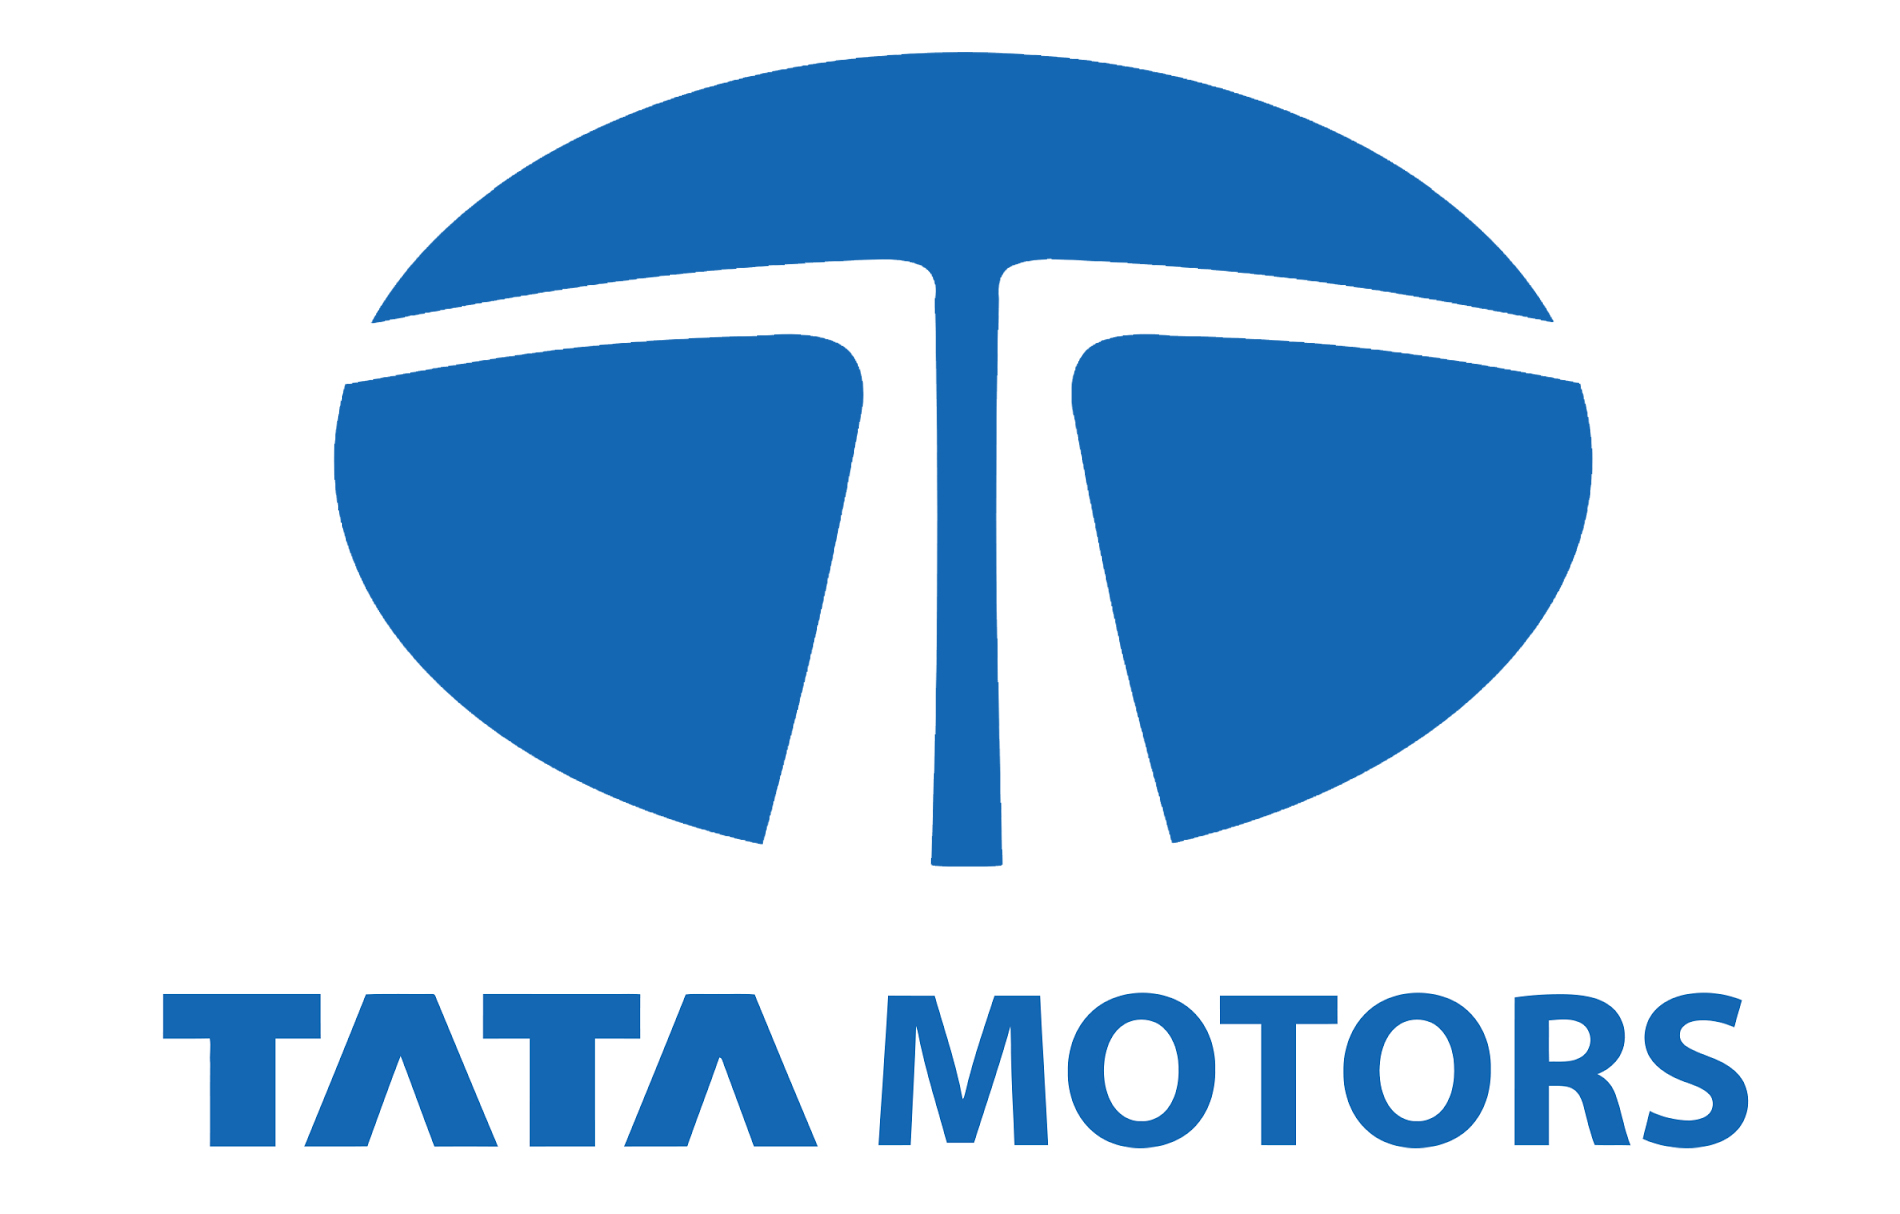 Tata Motors Cars Showroom - Champak Automobiles Private Limited - Logo